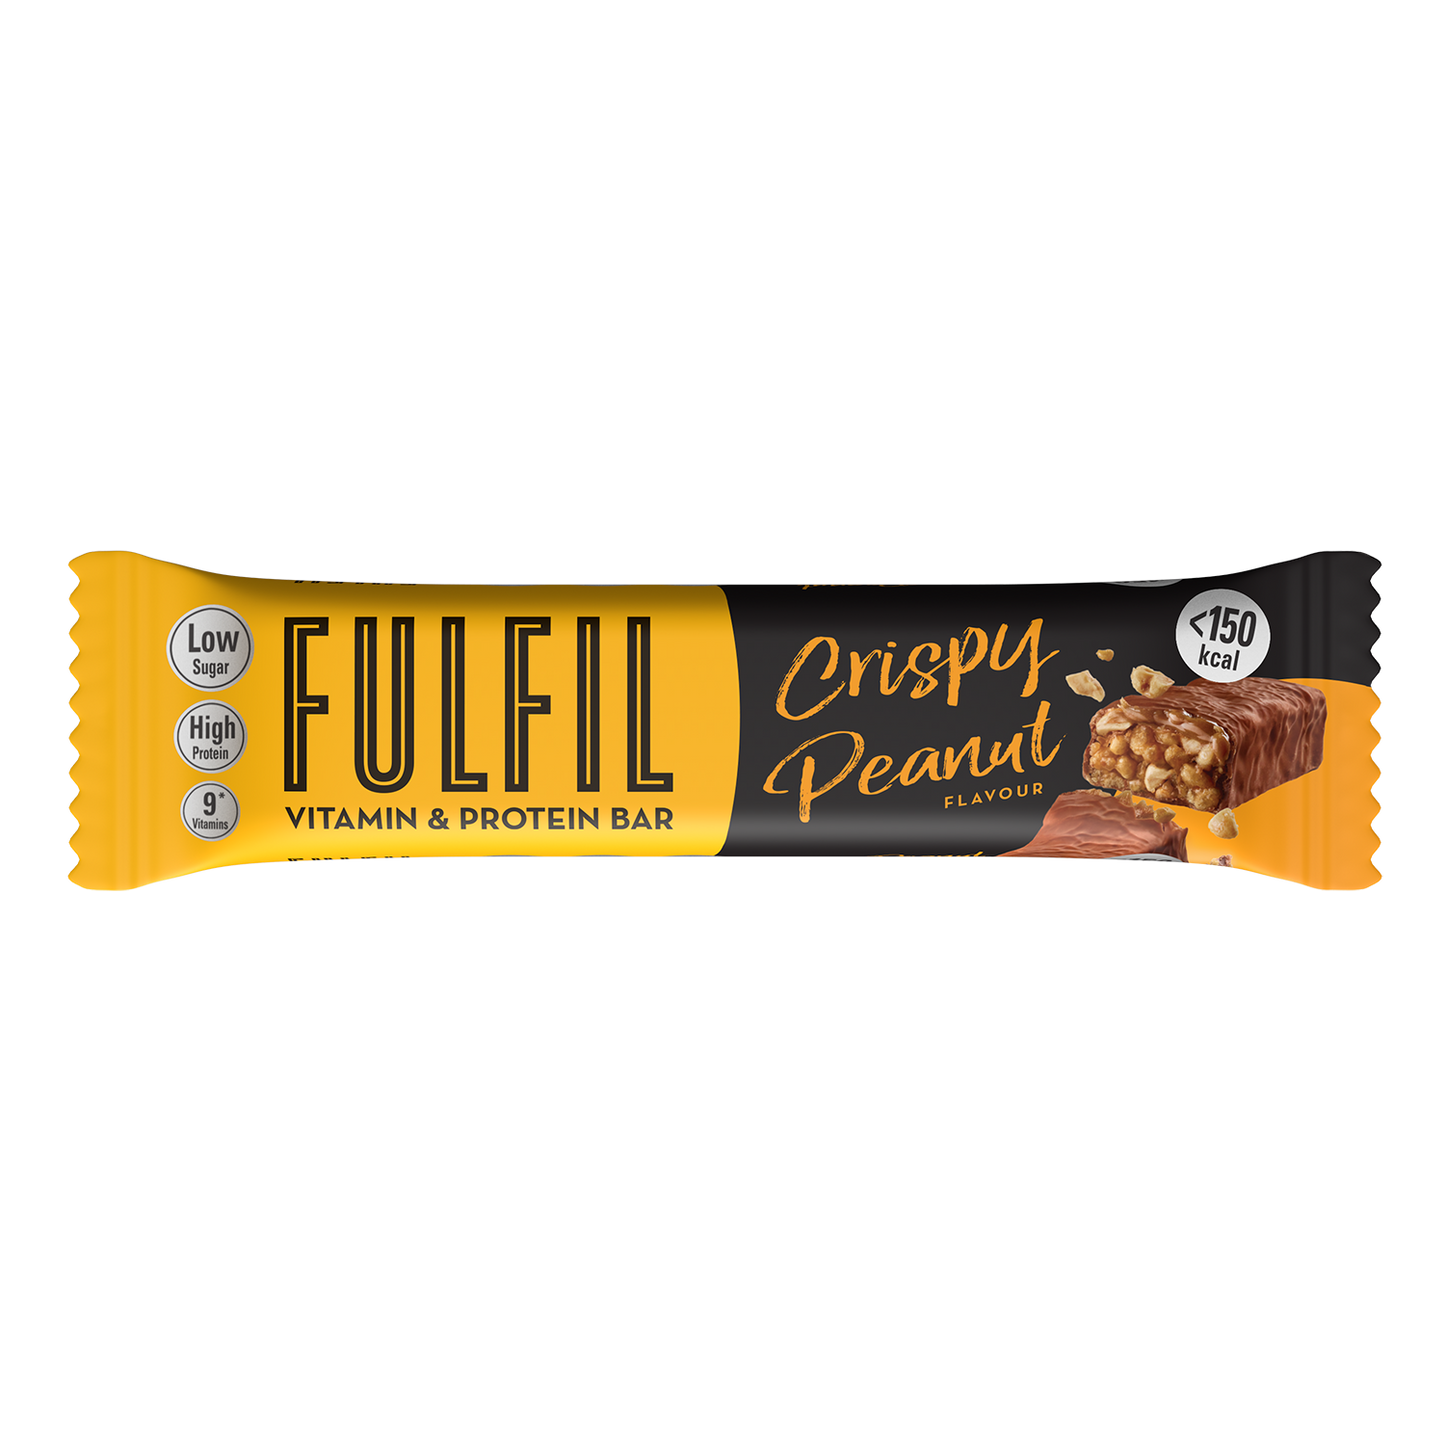 Fulfil Crispy Peanut Flavour - Vitamin & Protein Bar,Low Sugar, High Protein, 150 Calories With 9 Vitamins, 37gm X 18 Bars (BOX)